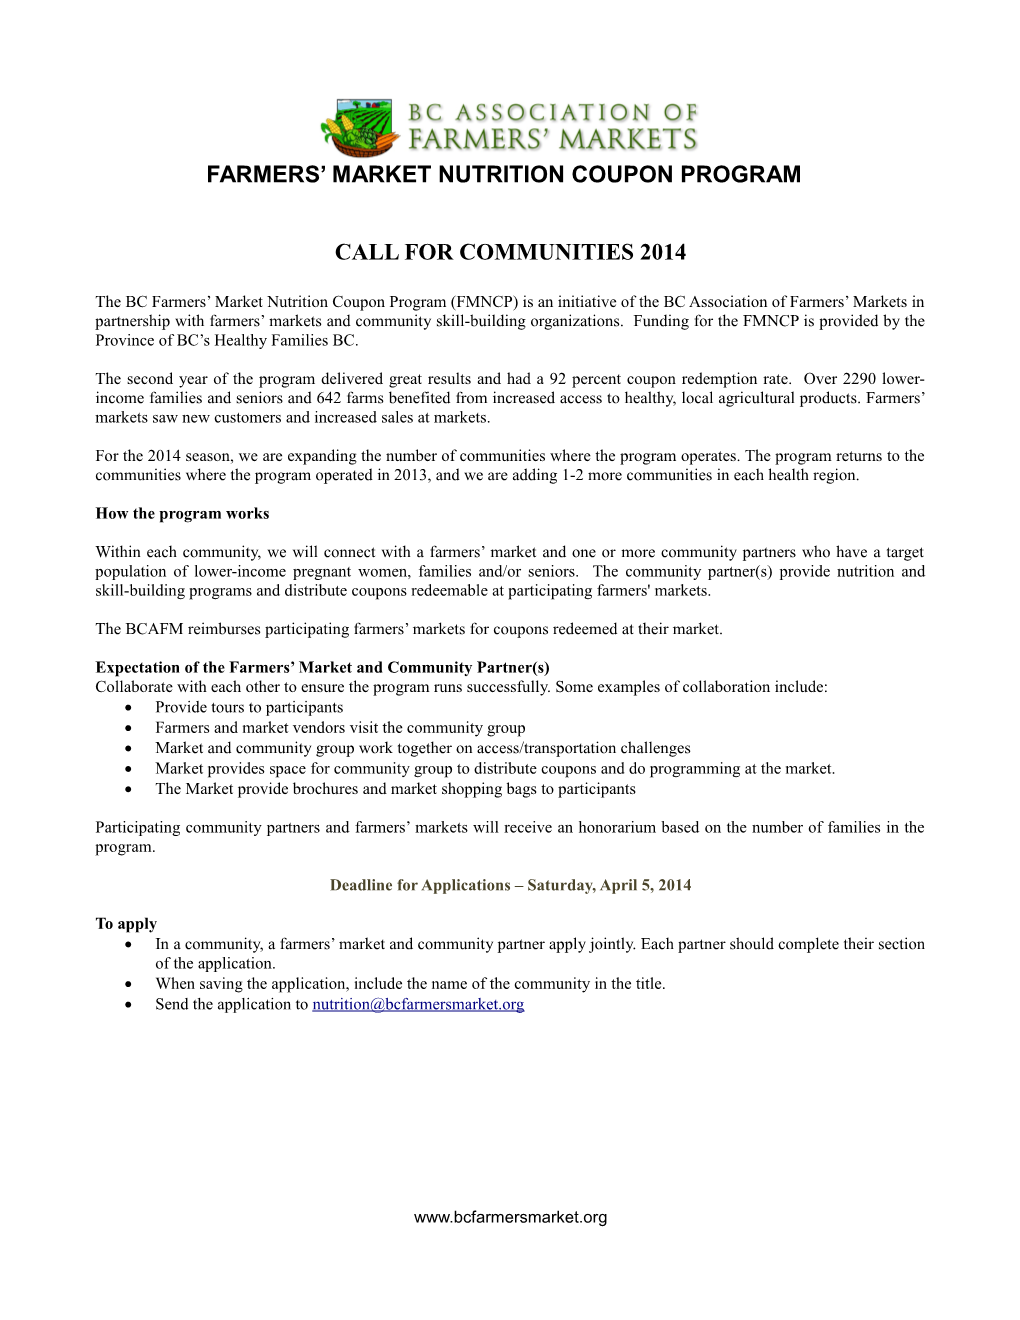 Farmers Market Nutrition Coupon Program